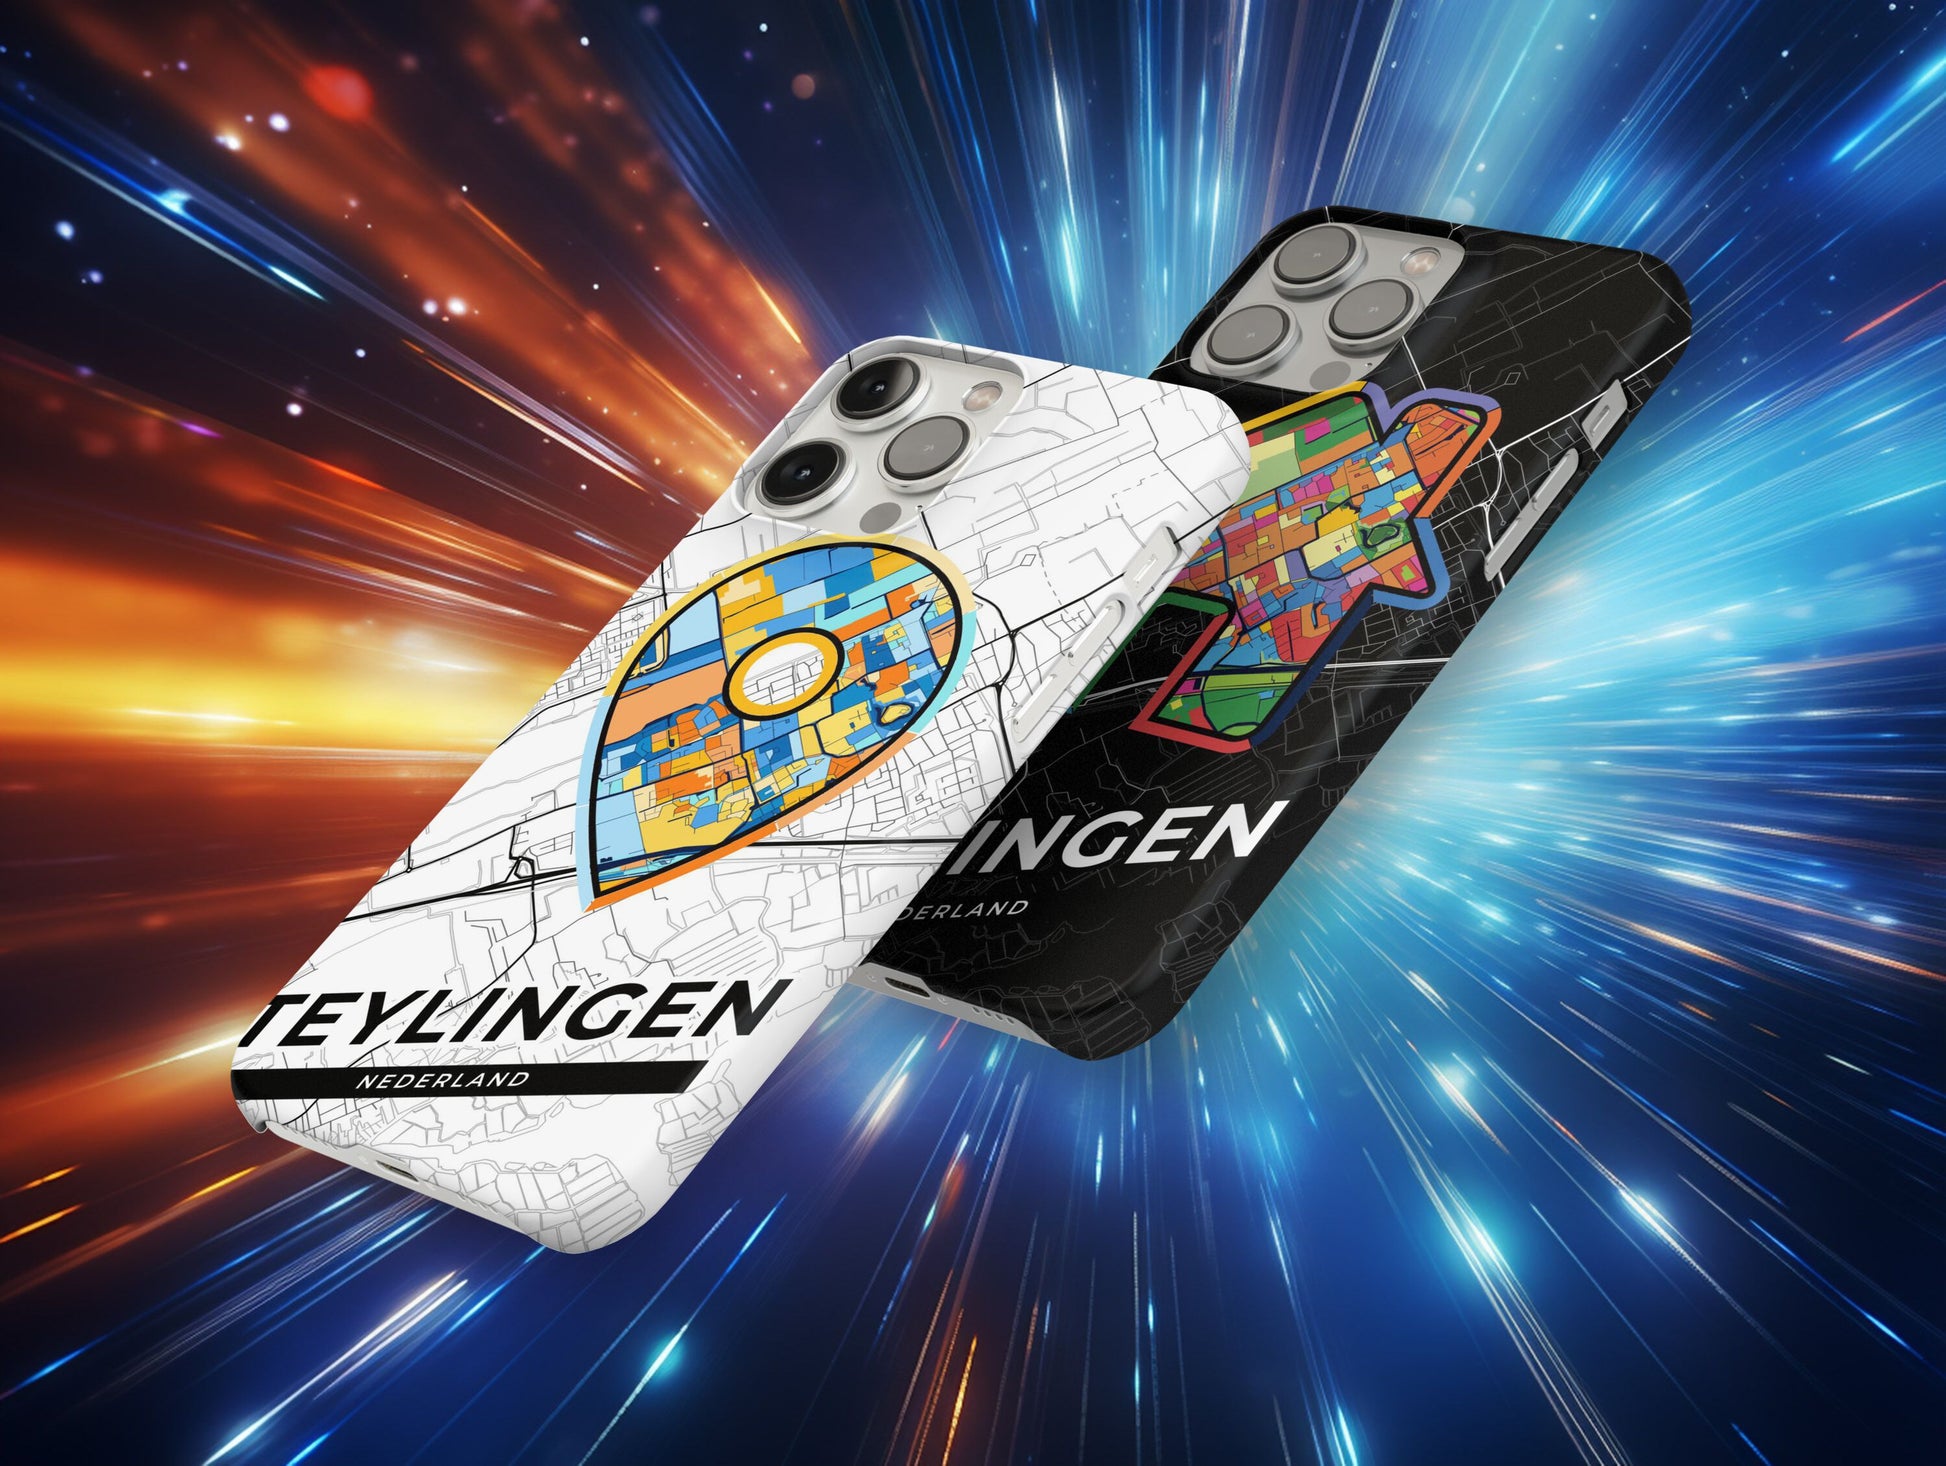 Teylingen Netherlands slim phone case with colorful icon